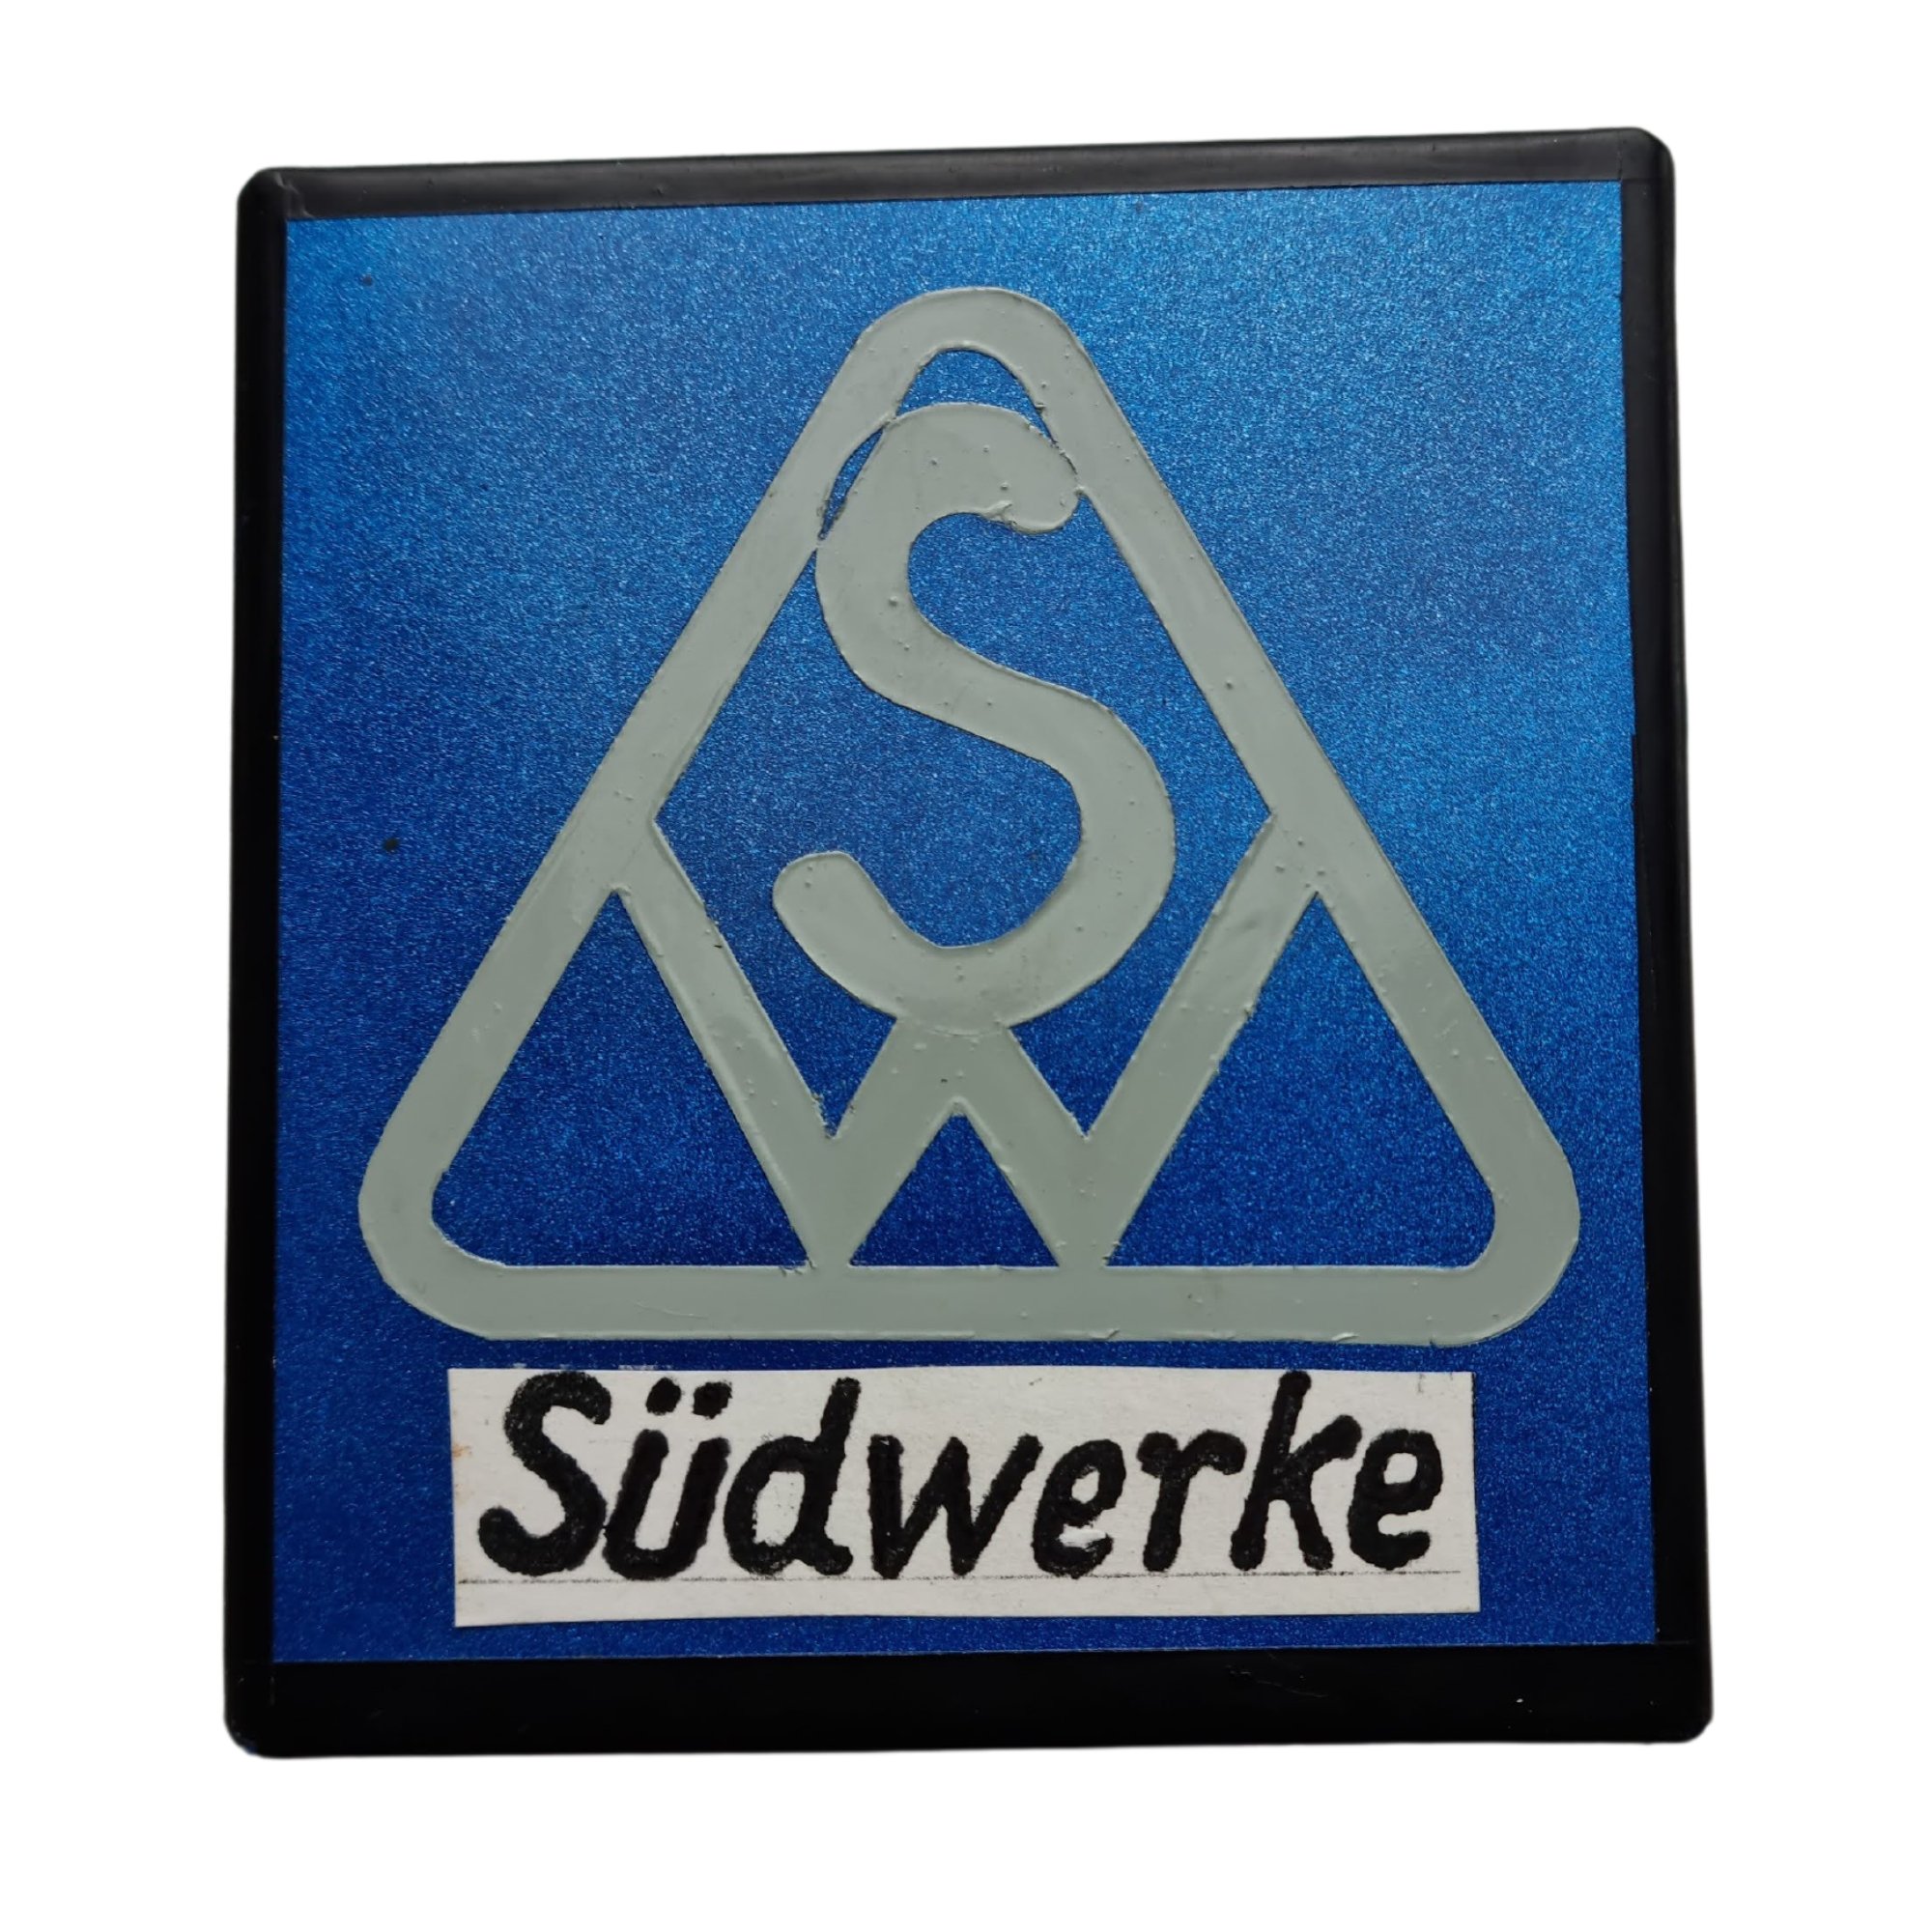 Südwerke-Emblem (Deutsches Straßenmuseum e.V. CC BY-NC-SA)